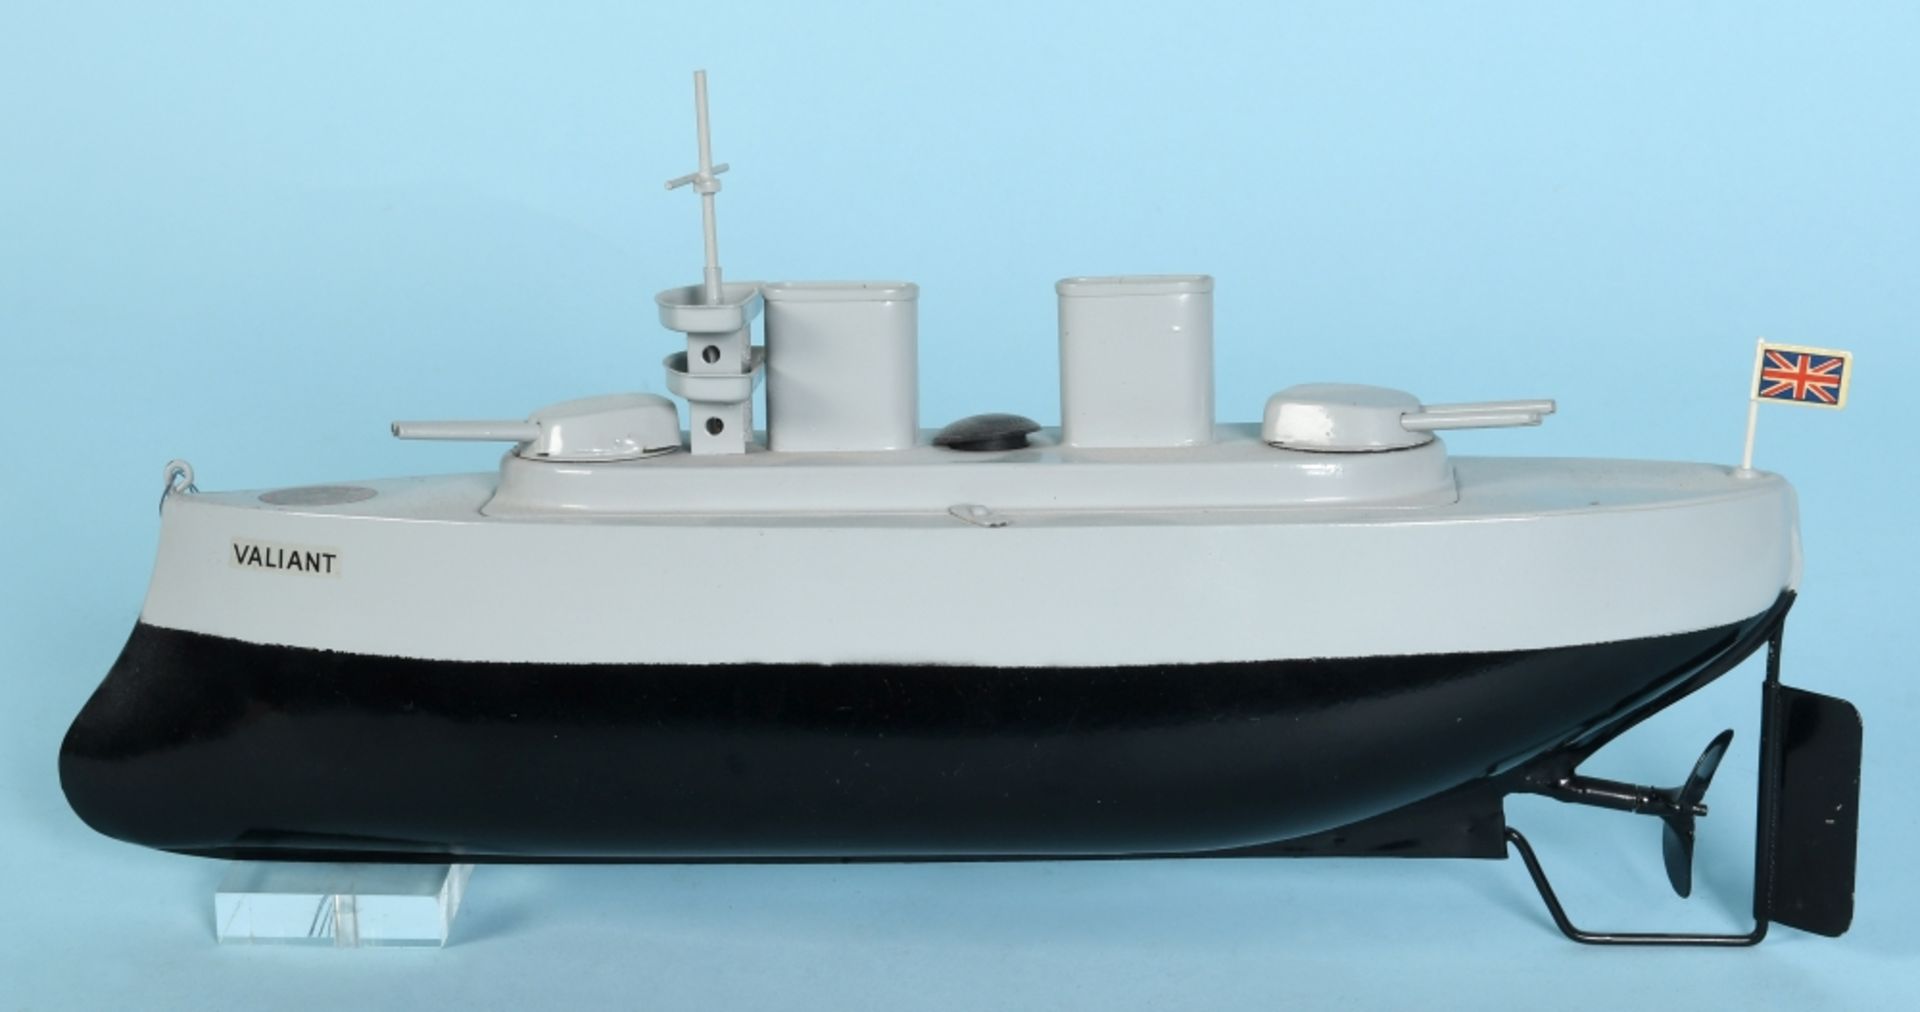 Kriegsschiff - Valiant "Sutcliffe Model, England"